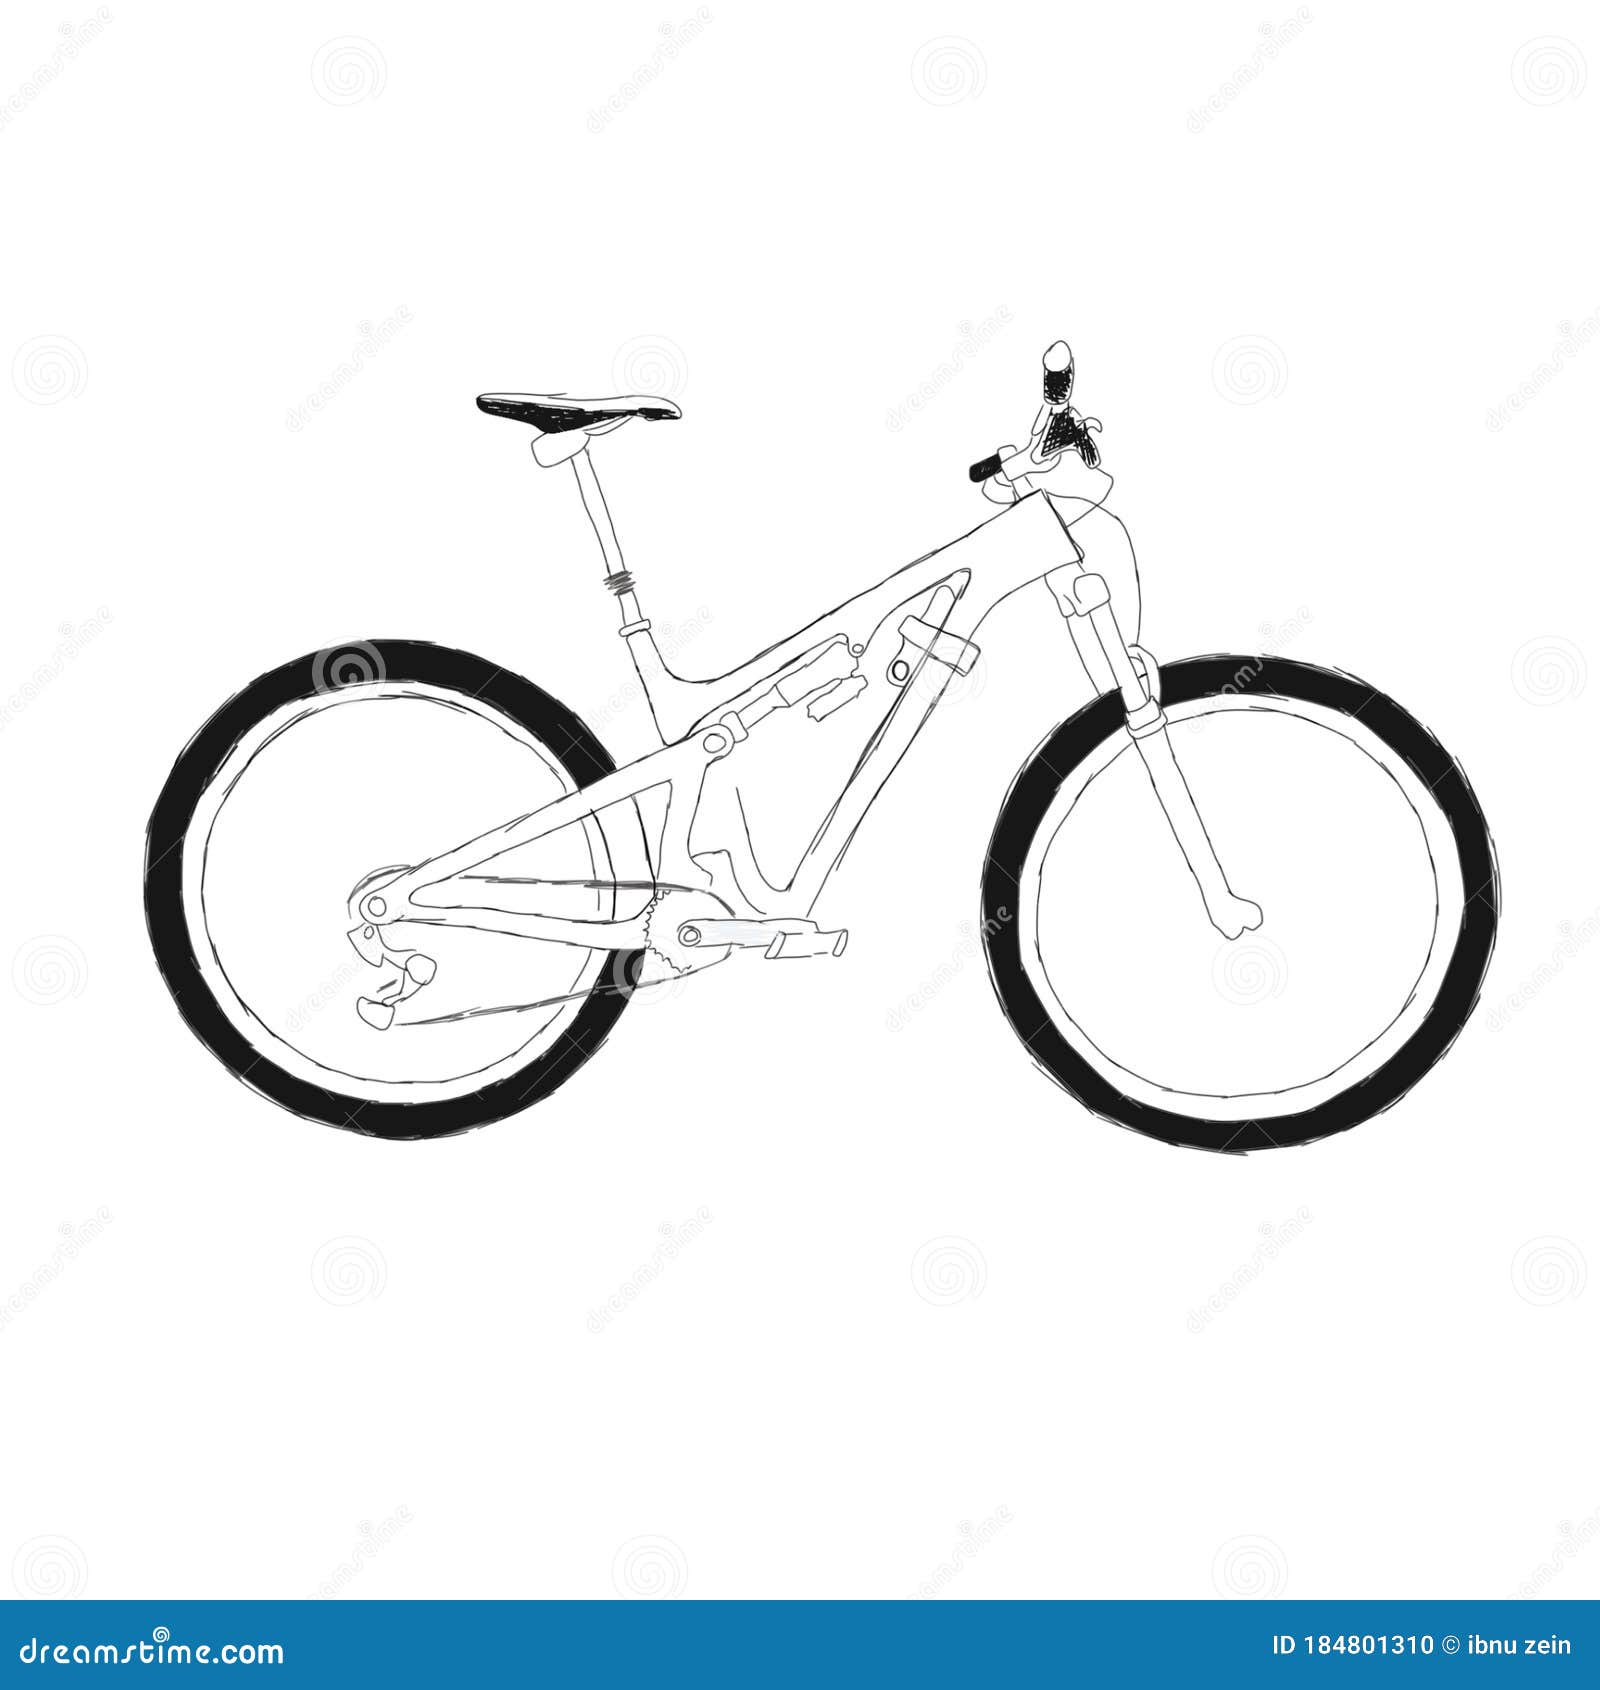 МТБ велосипед рисунок